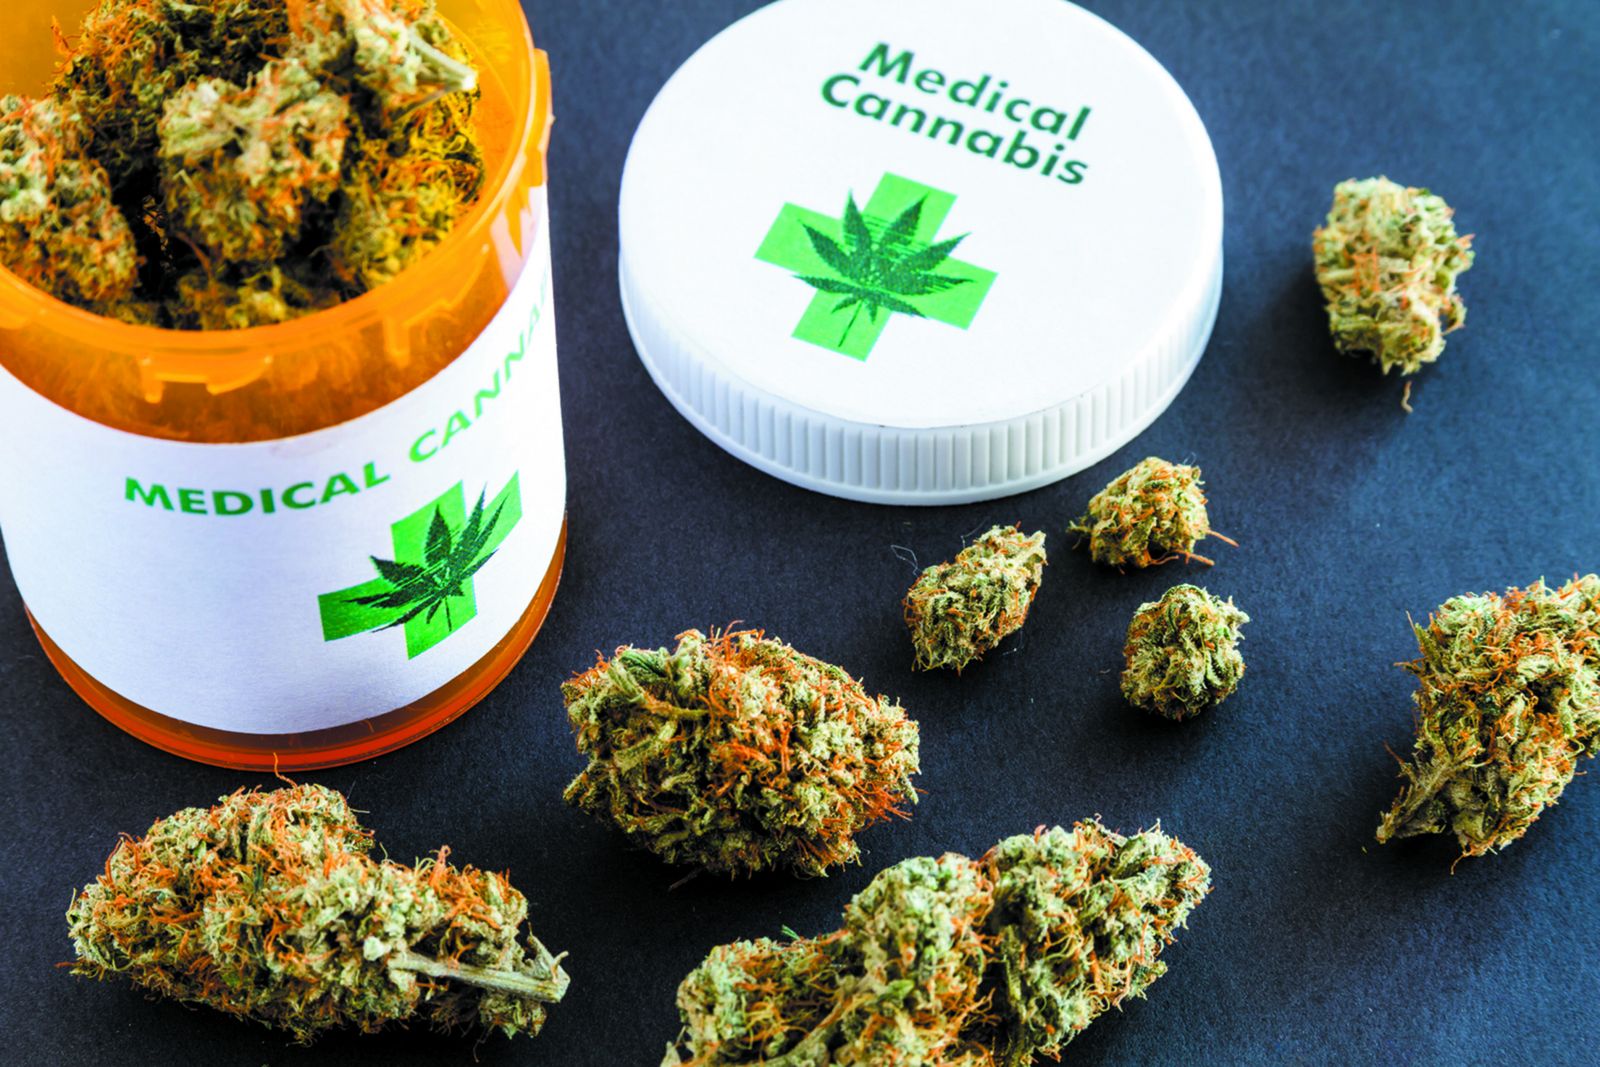 Medical marijuana: Know the facts - Harvard Health